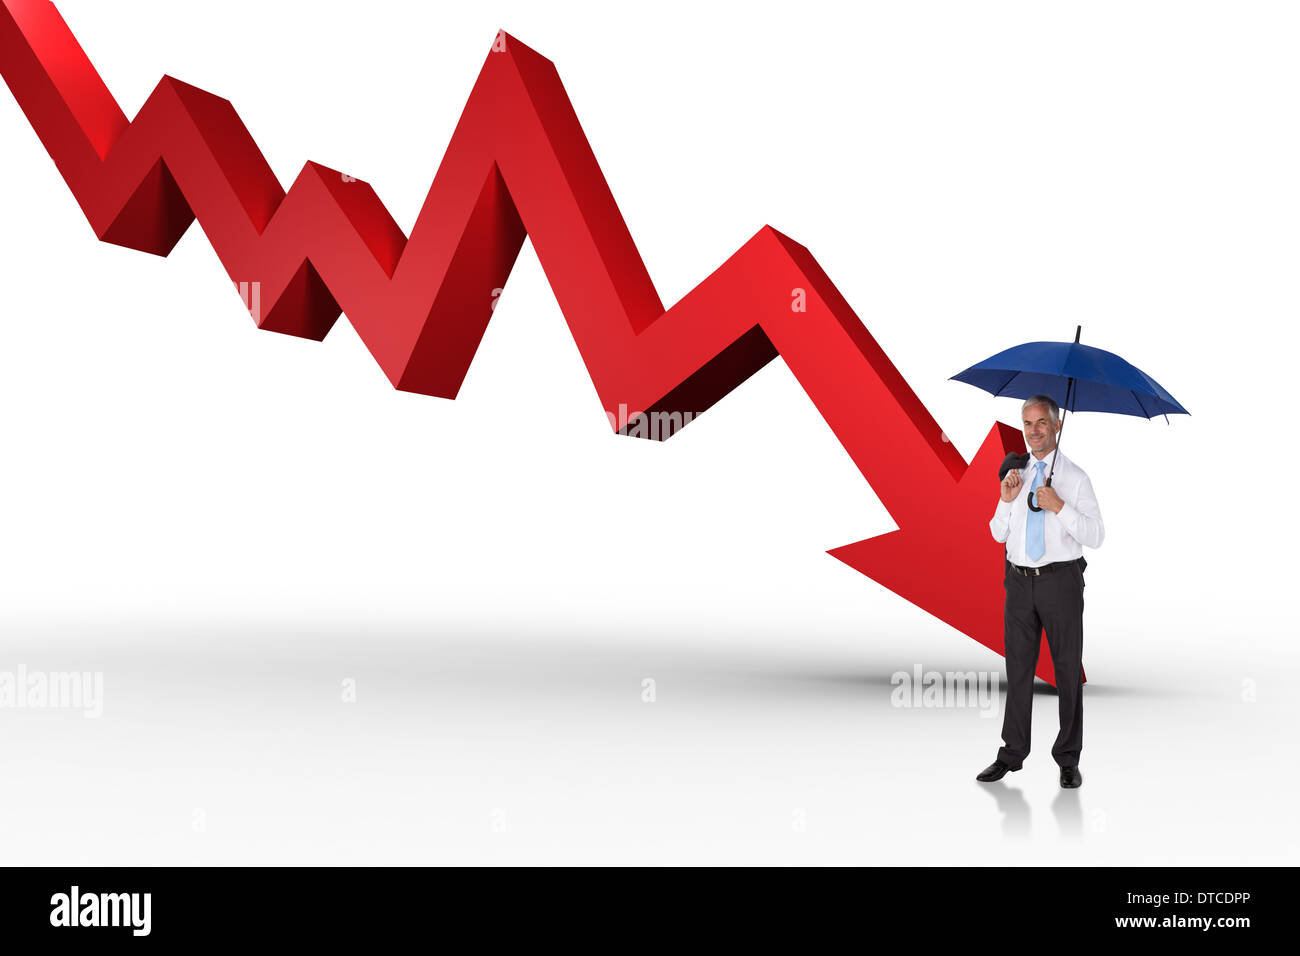 Composite image of happy businessman holding umbrella Stock Photo